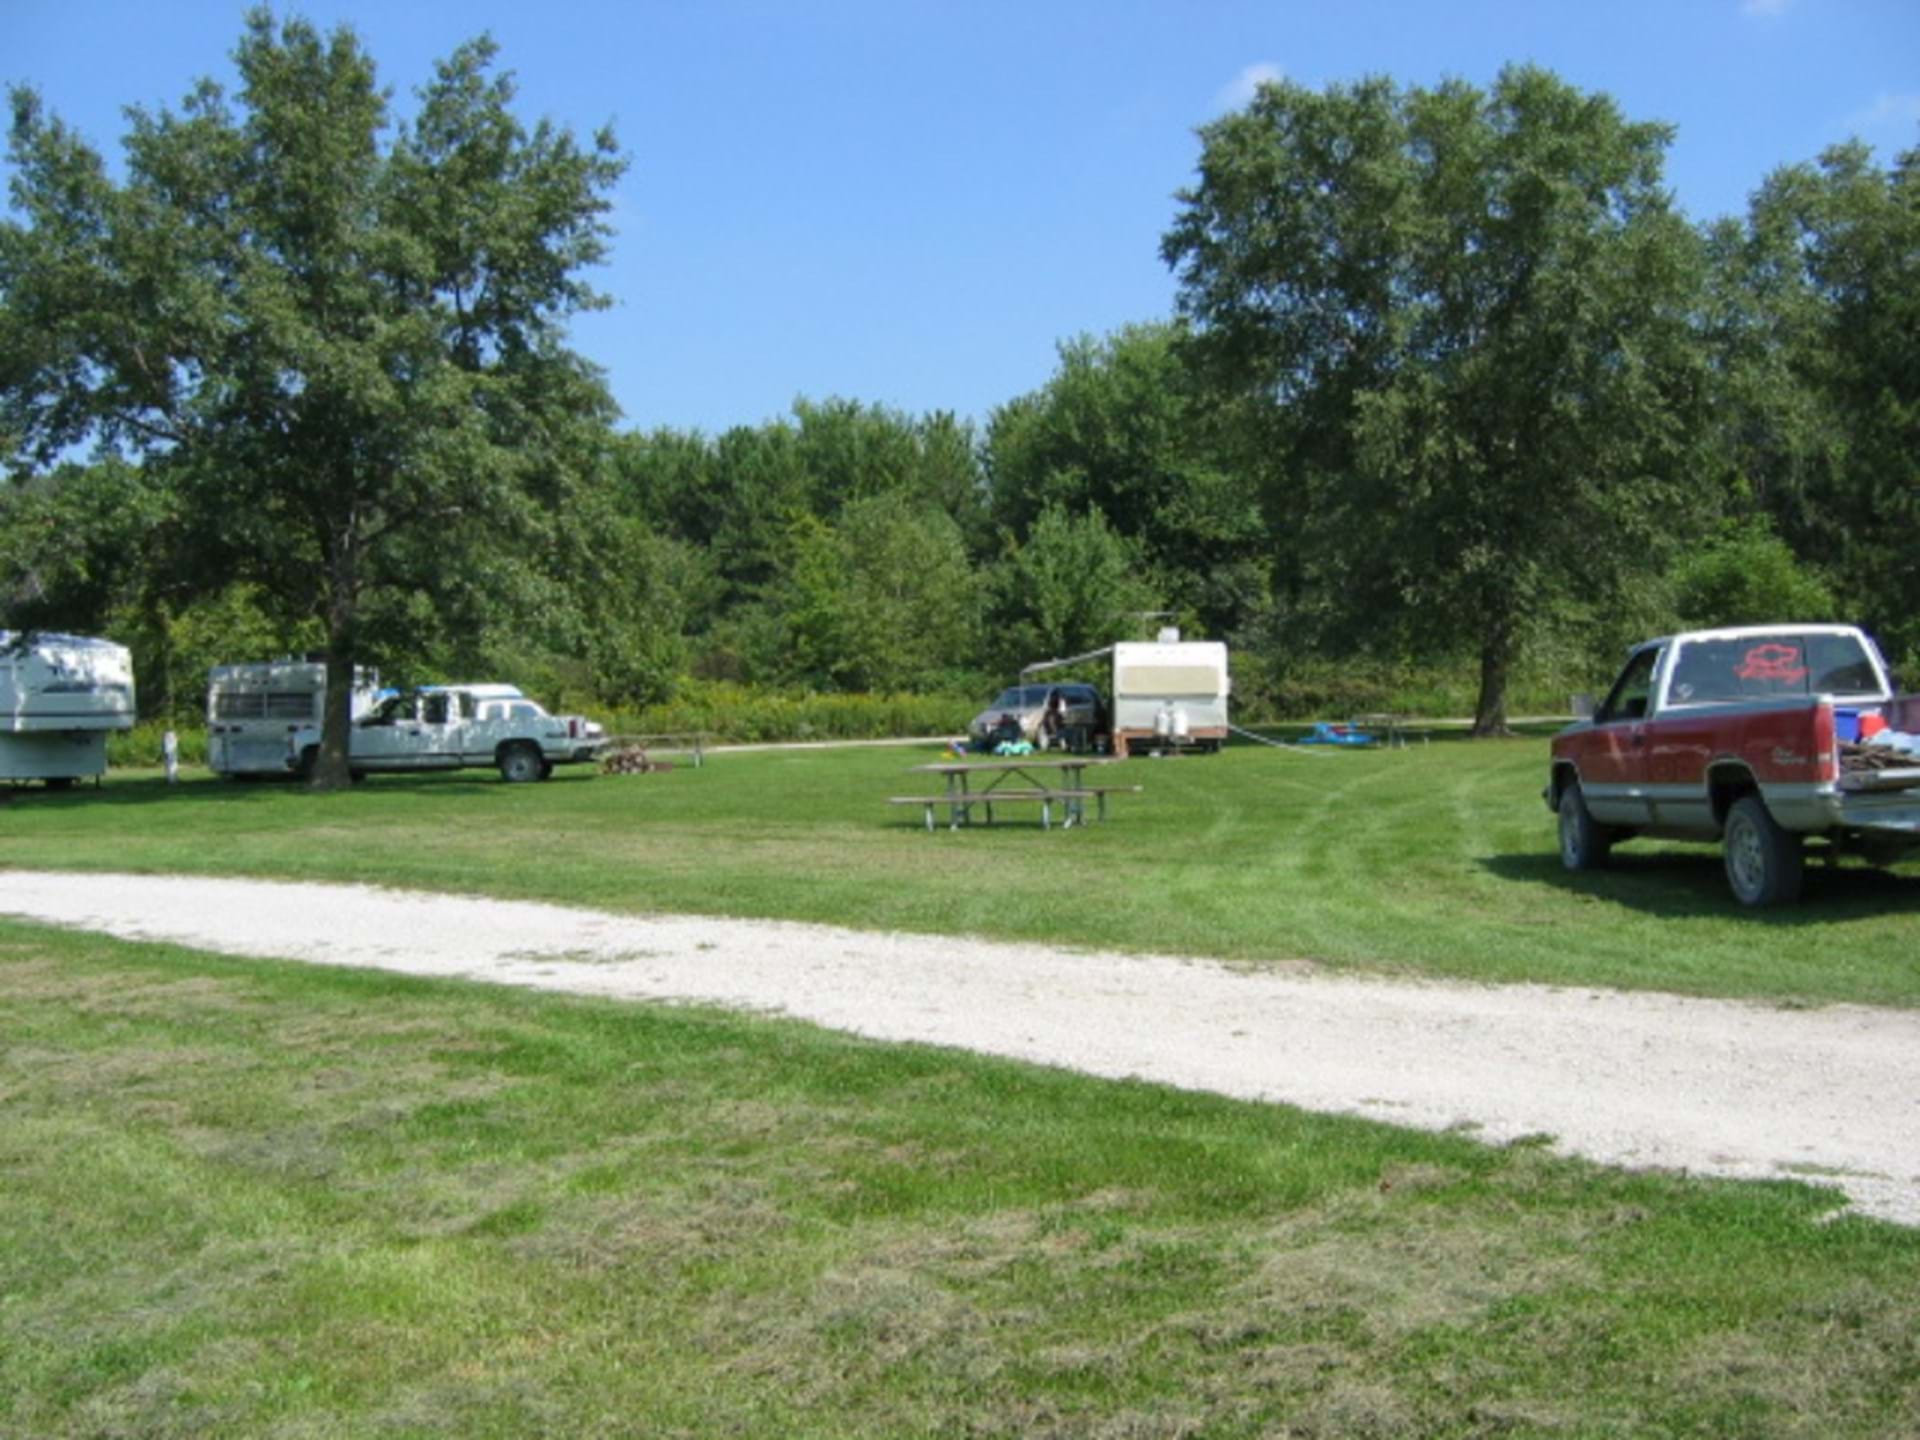 Northeast corner of campground